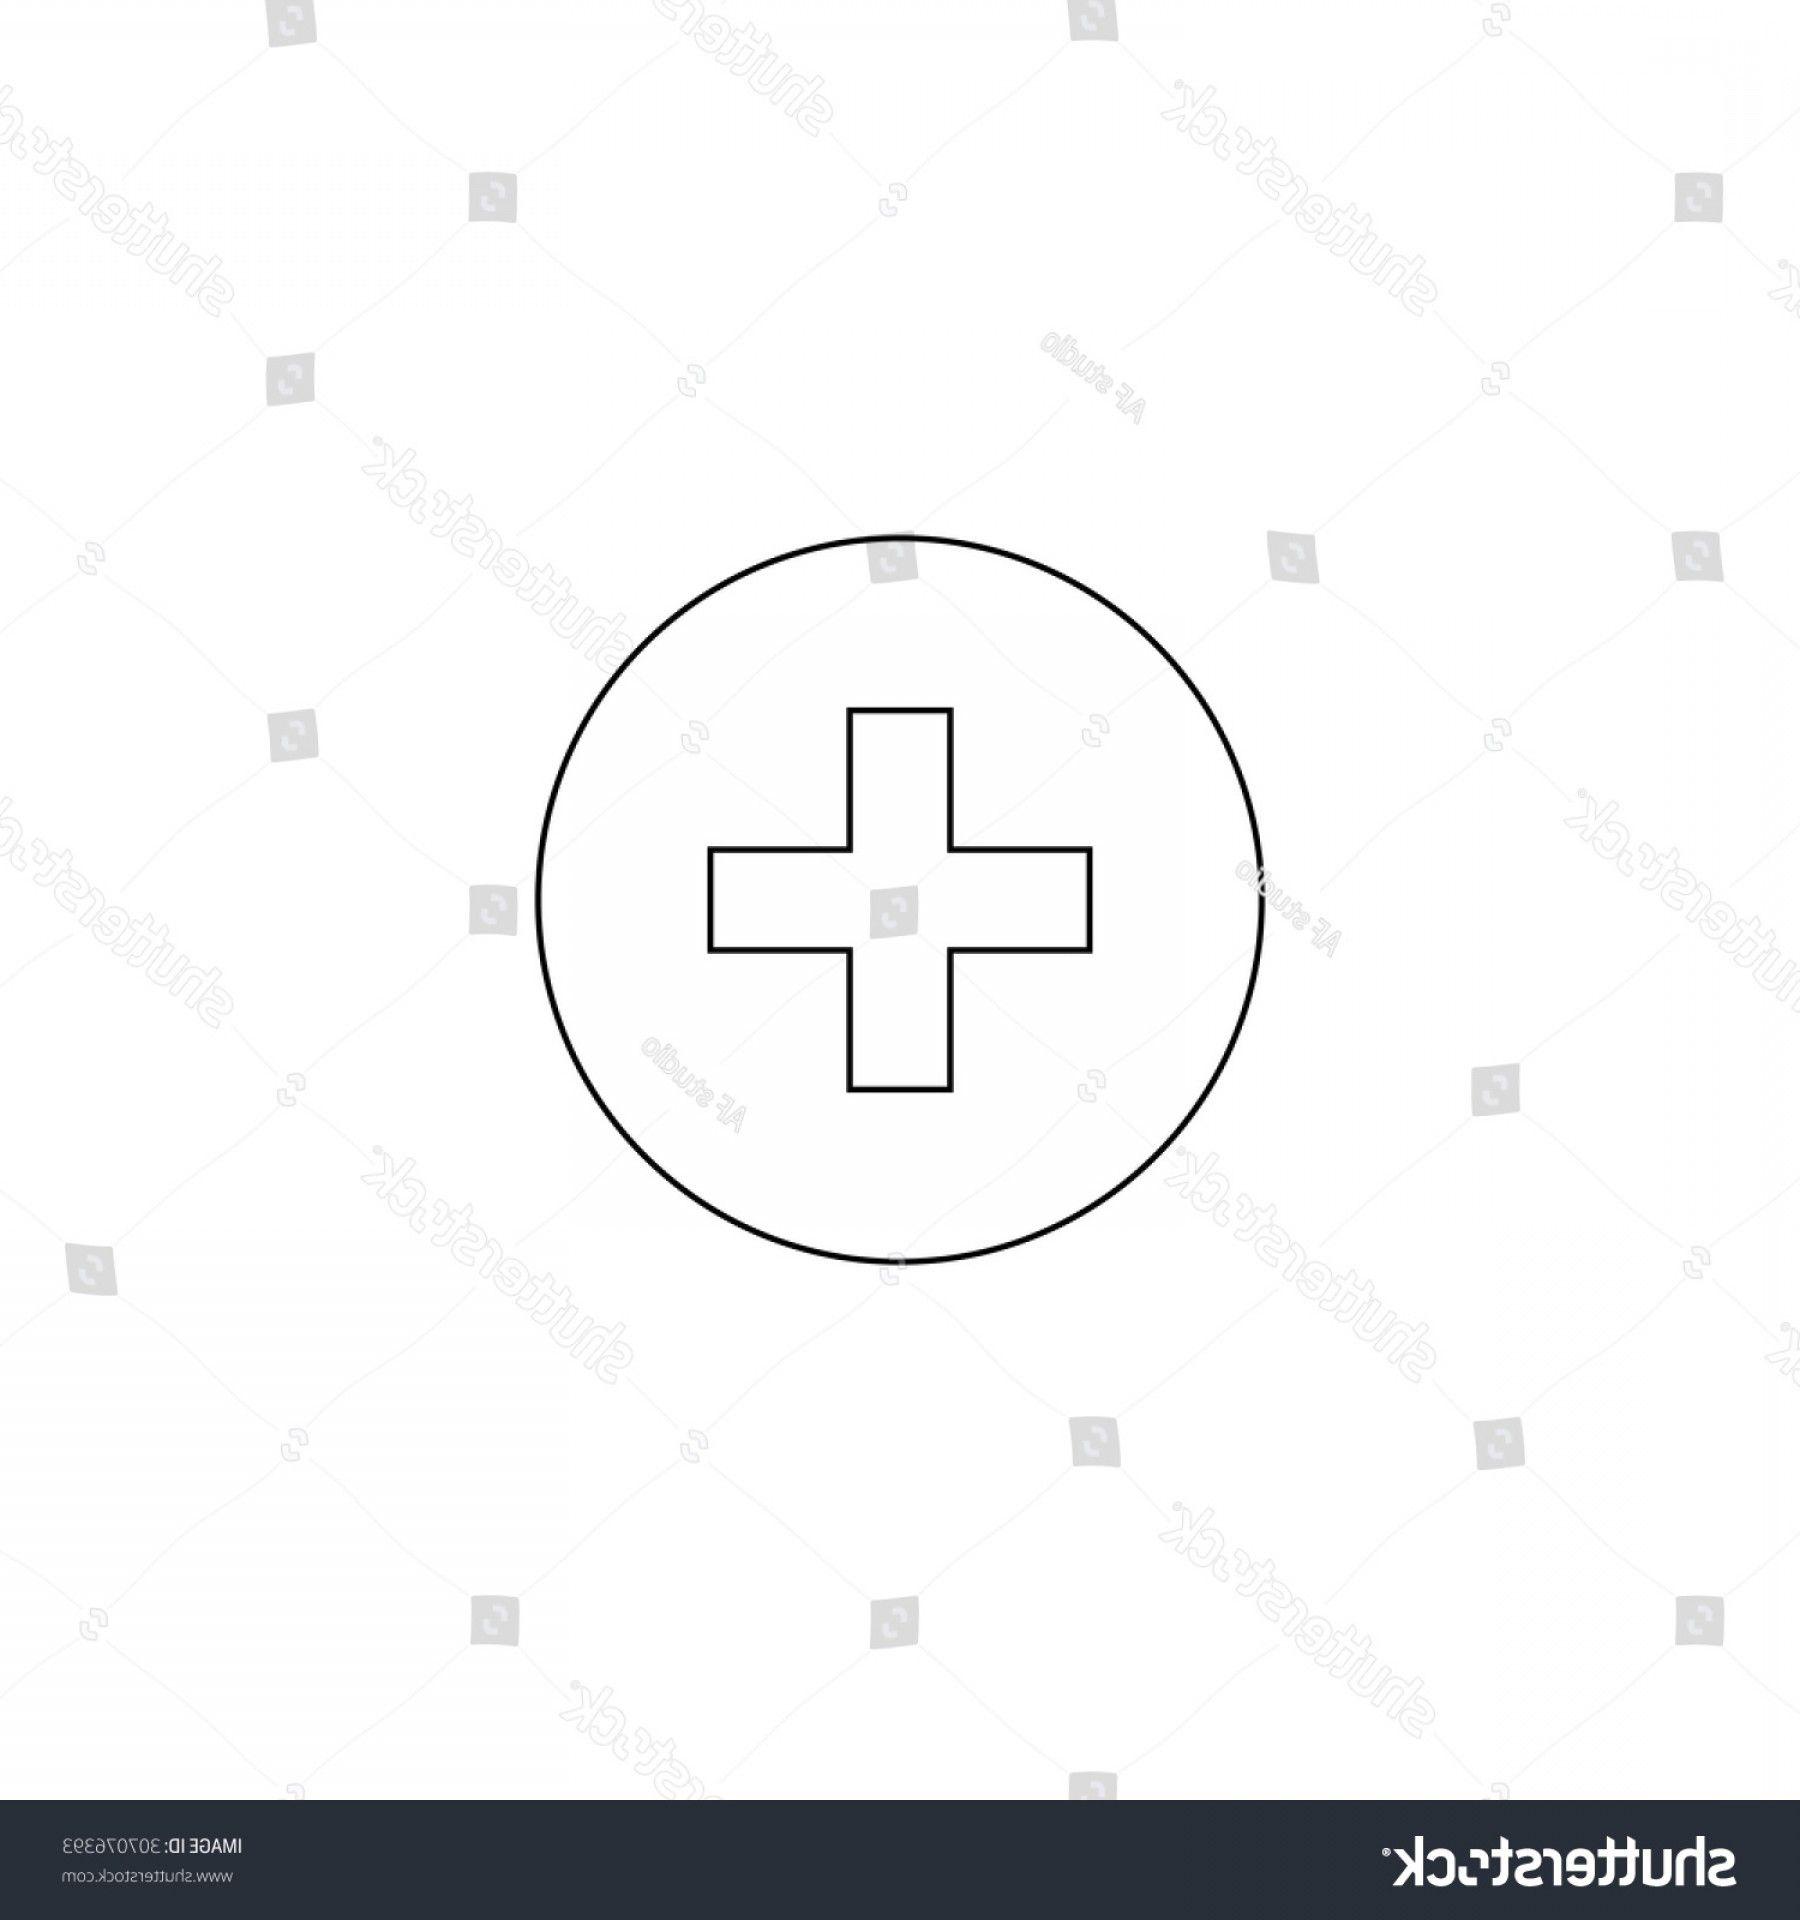 Black Medical Cross Logo - Medical Cross Vector at GetDrawings.com | Free for personal use ...